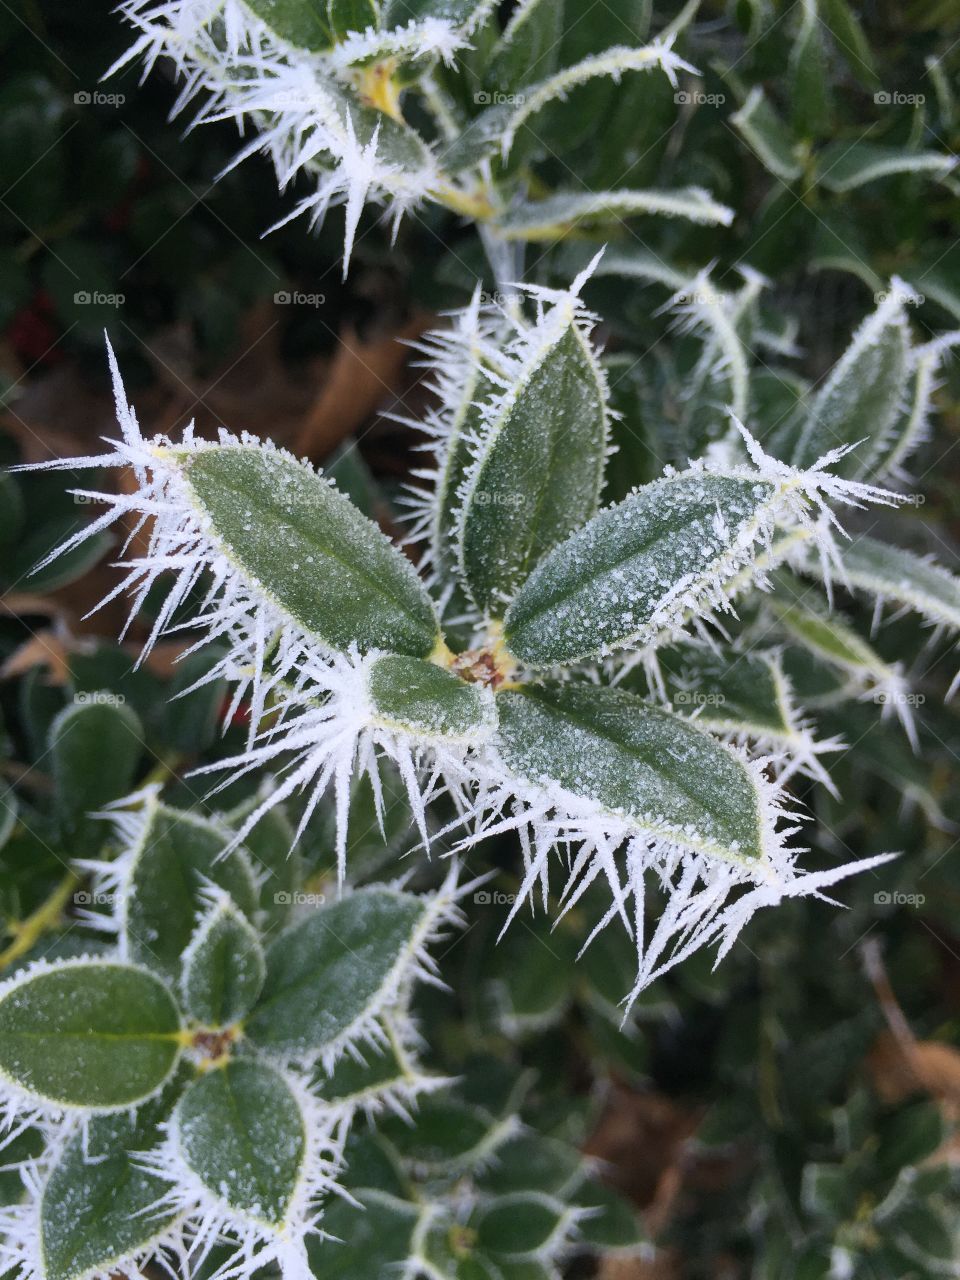 Snowflake on plant